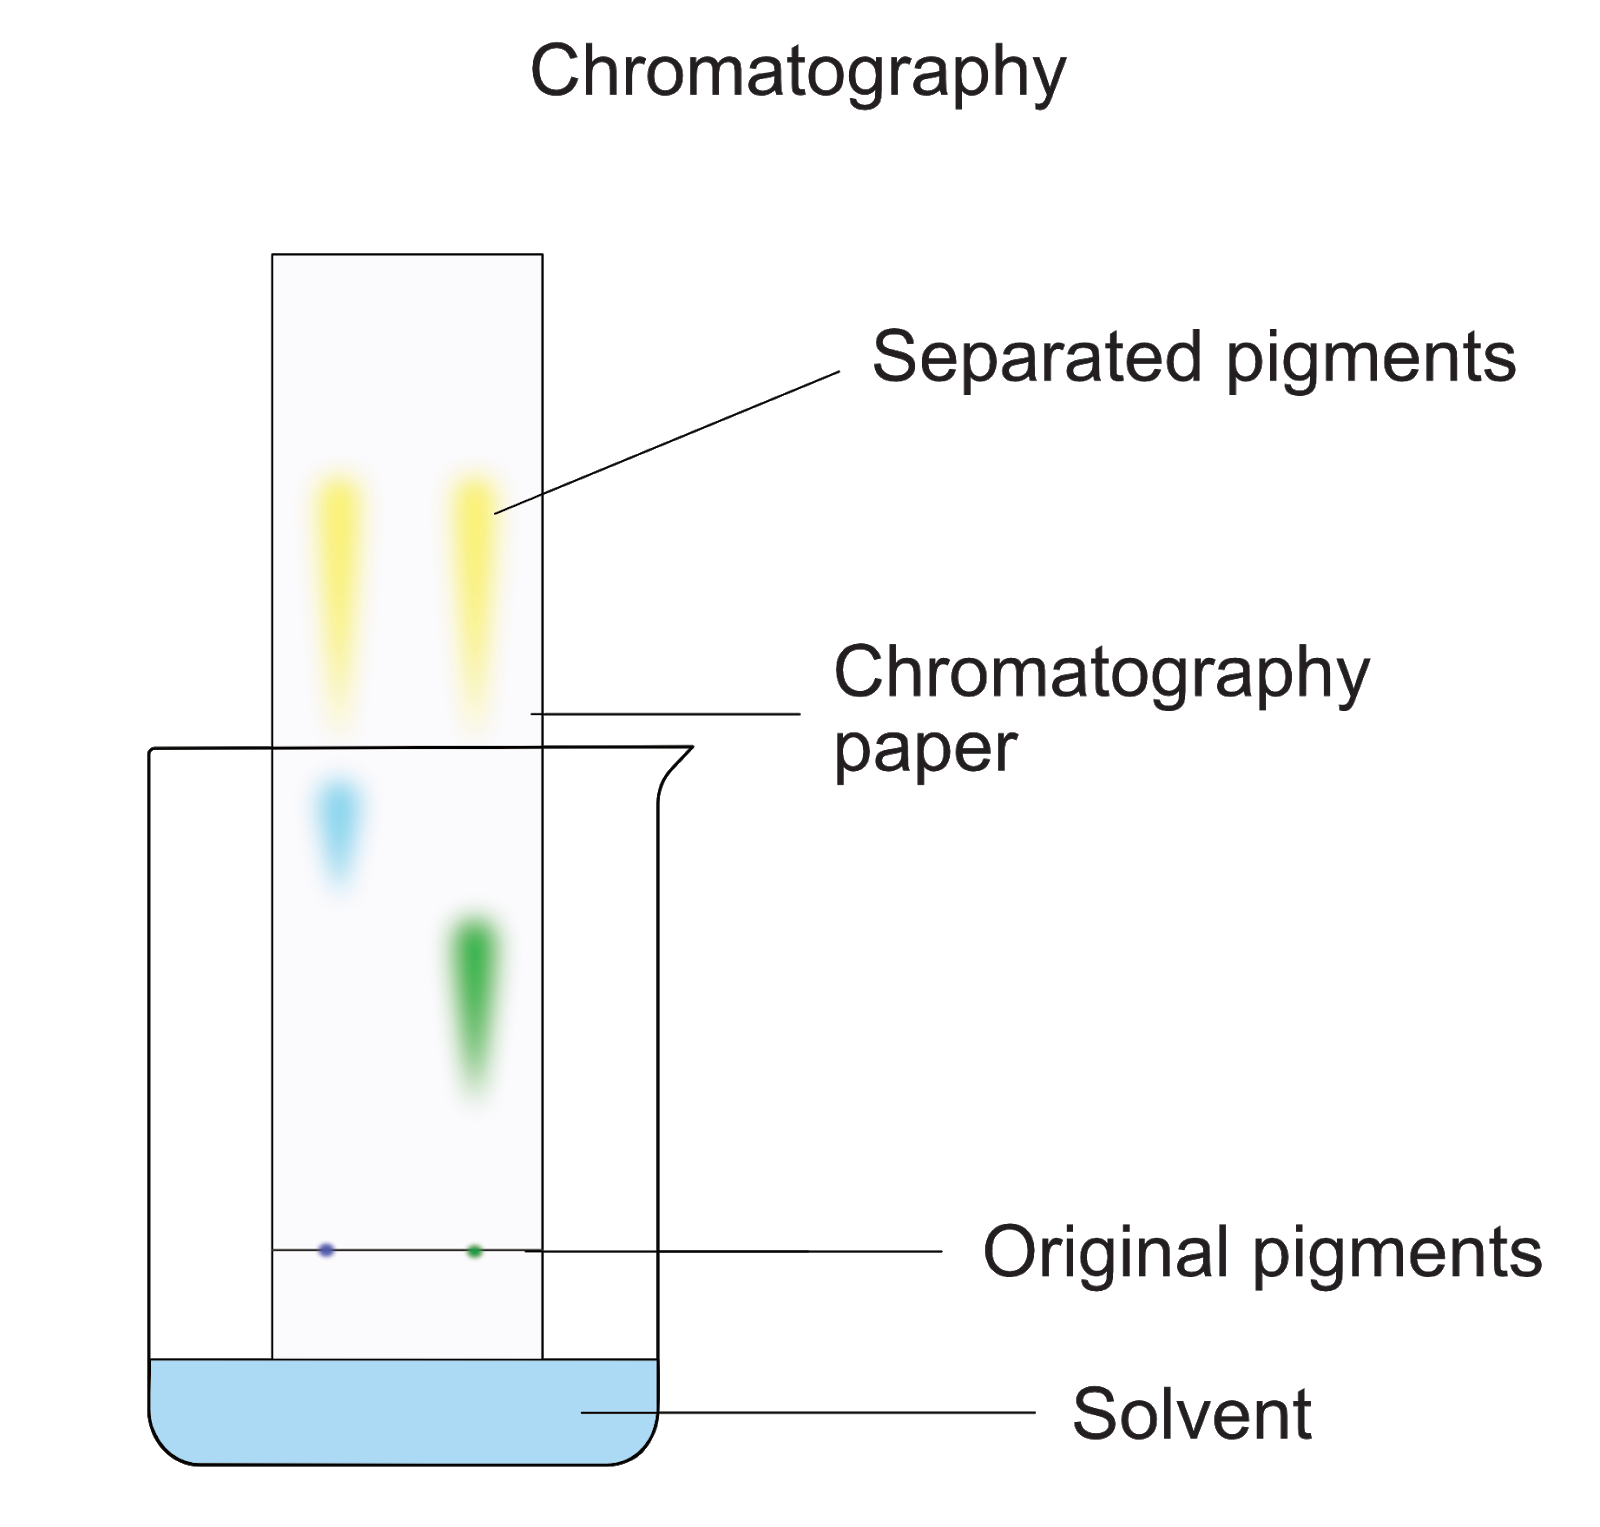 Chromotagraphy, figure 1